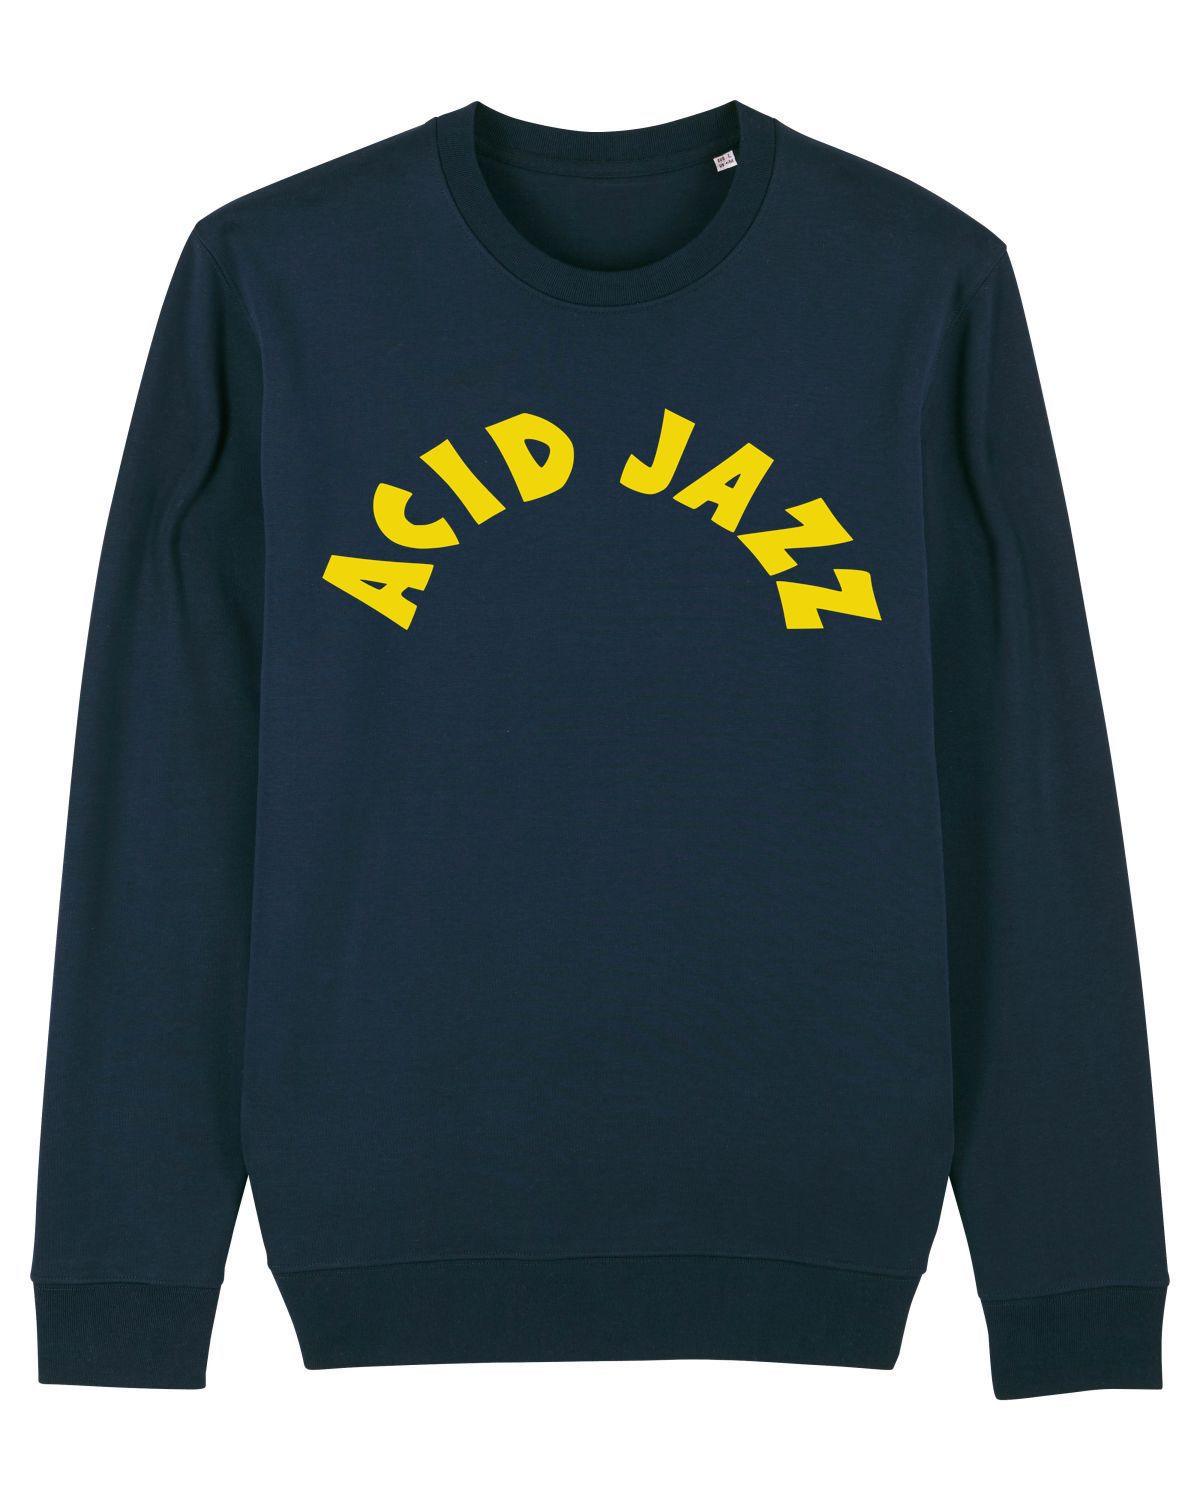 ACID JAZZ: College Sweatshirt Official Merchandise of Acid Jazz Records - SOUND IS COLOUR